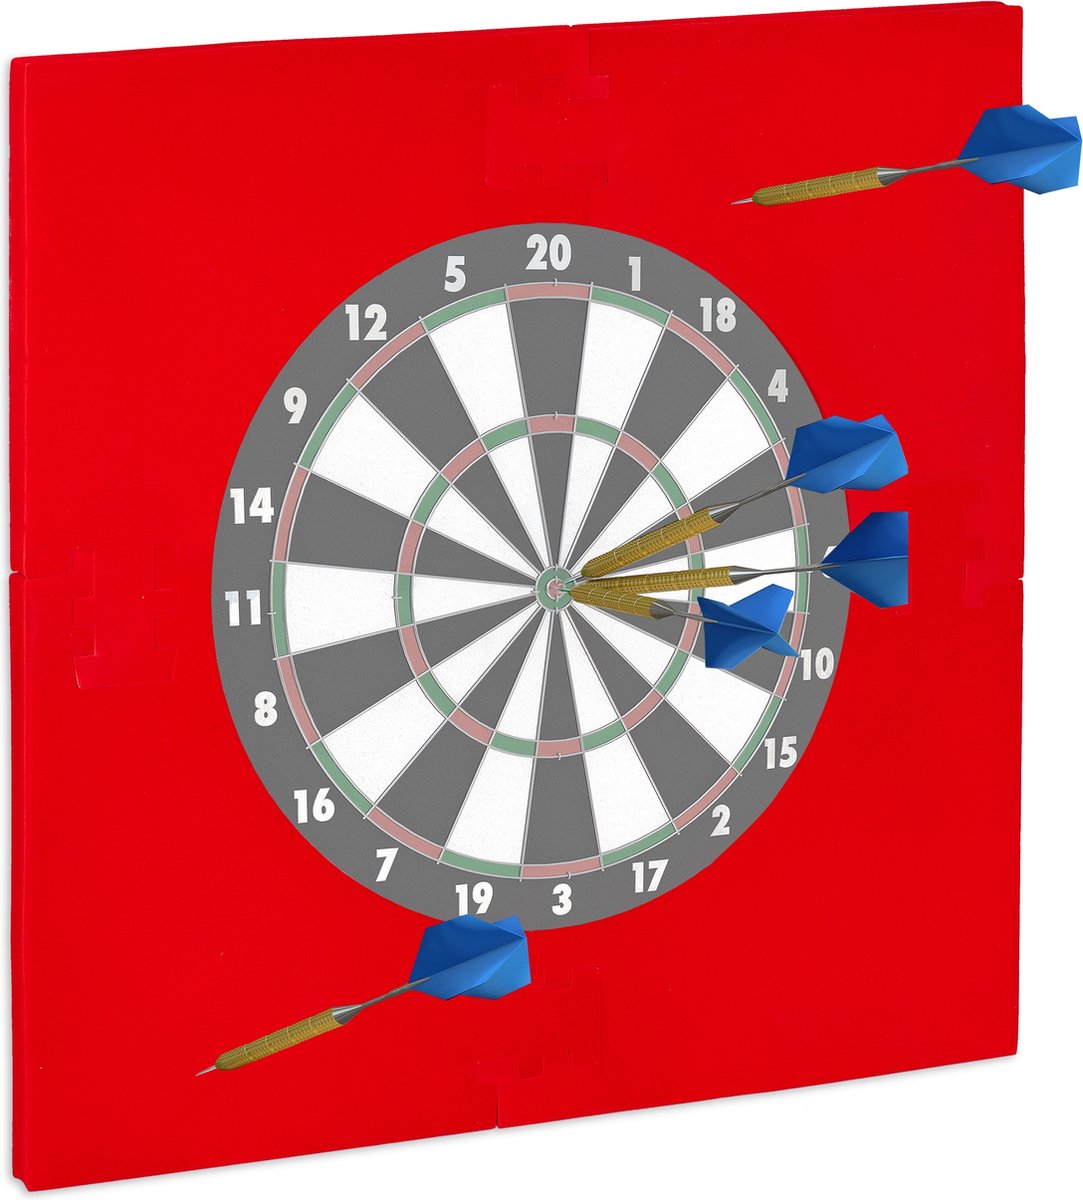 Relaxdays dartbord surround ring - beschermrand - beschermring - ring voor dartbord - 45cm - rood